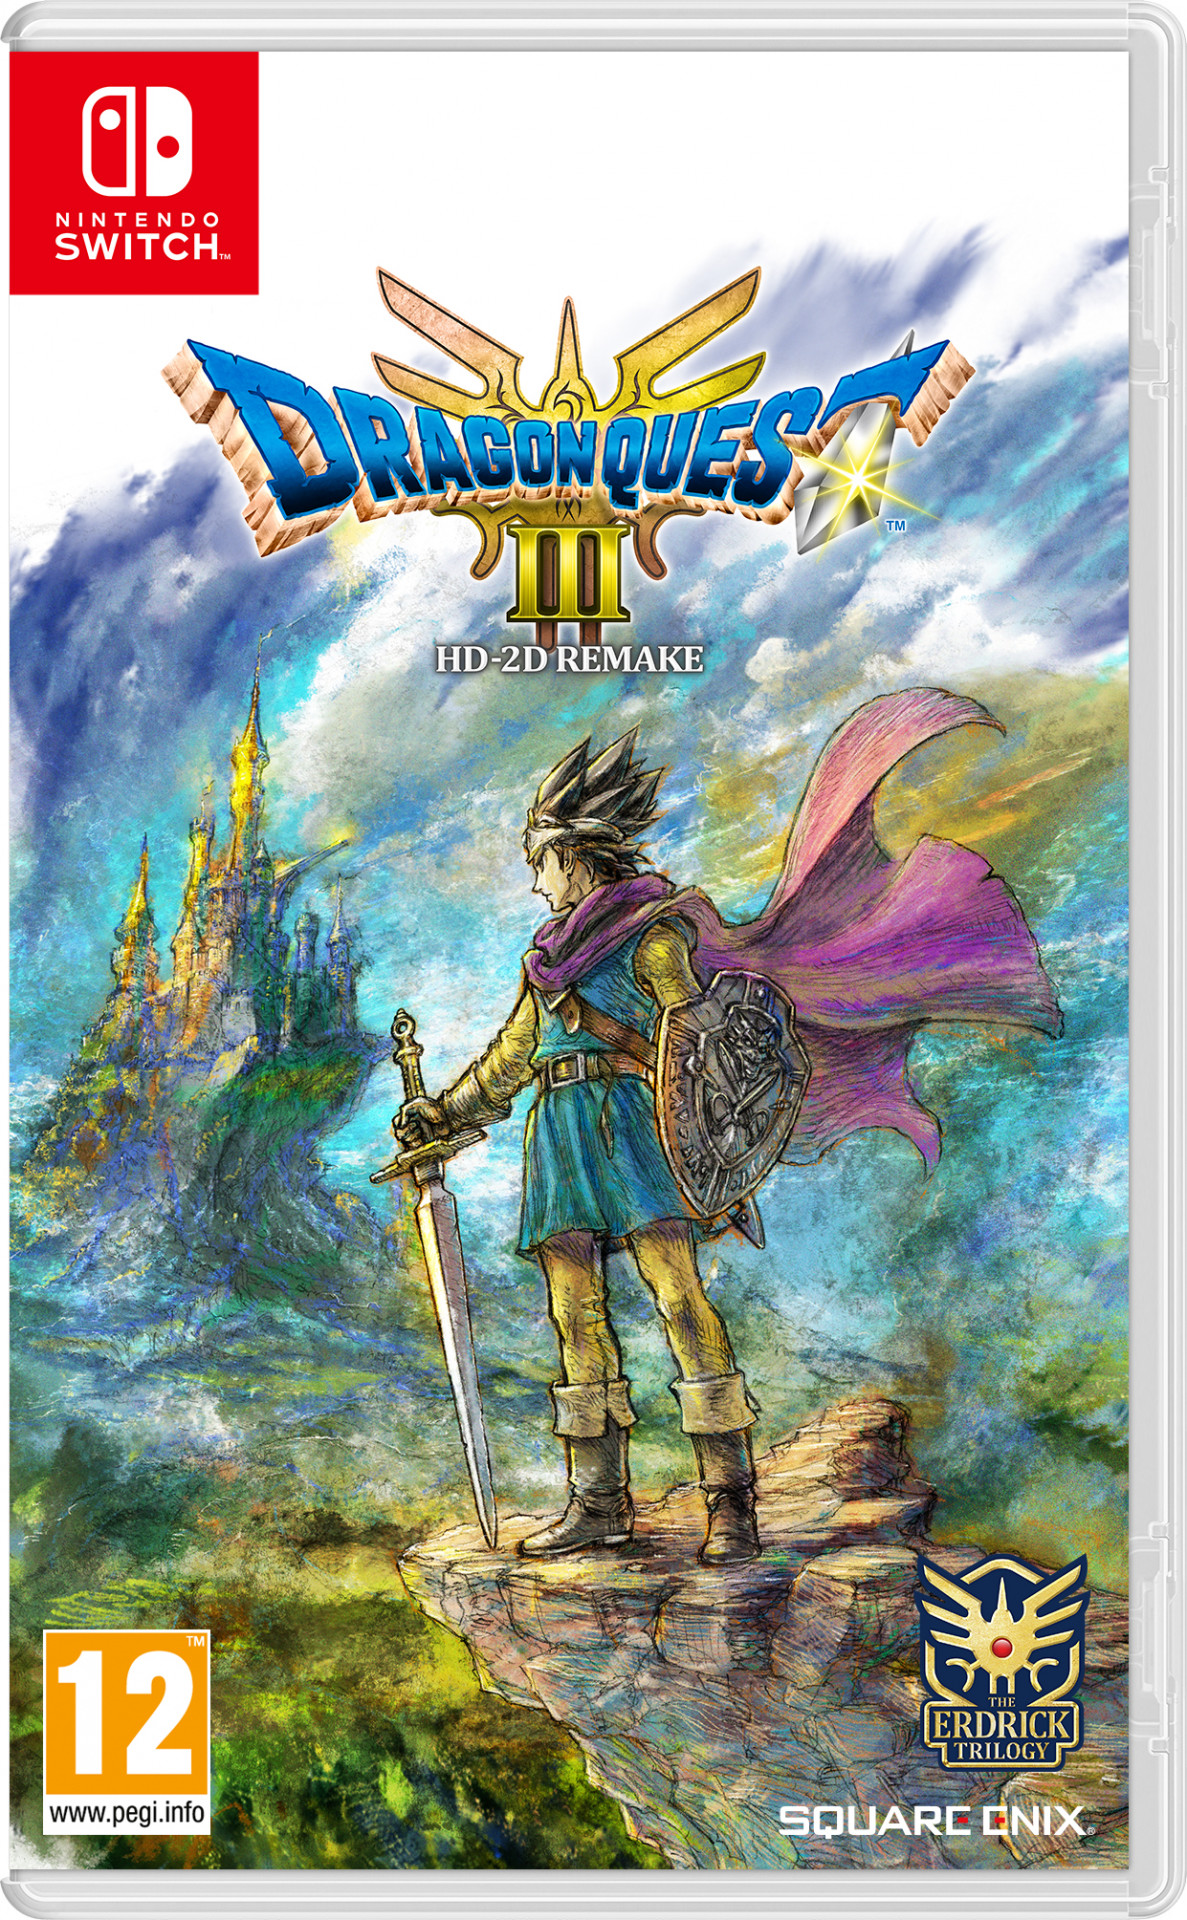 Dragon Quest III HD-2D Remake - Nintendo Switch